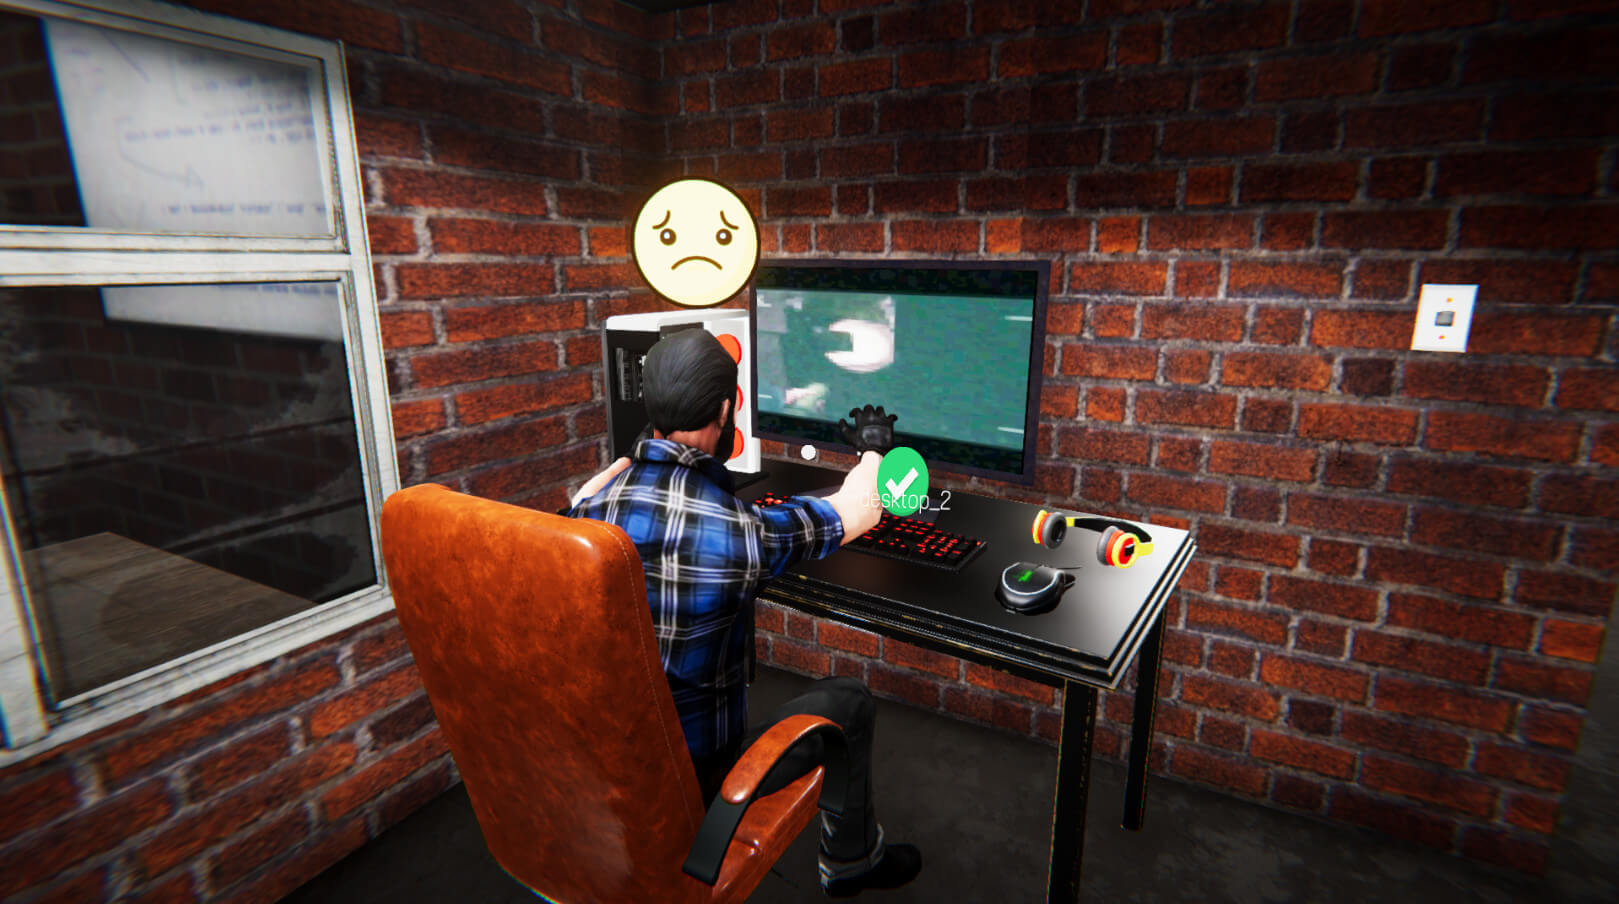 Internet cafe simulator 2. Игра Cafe Simulator. Internet Cafe Simulator (v build 12.09.2020). Интернет кафе симулятор.